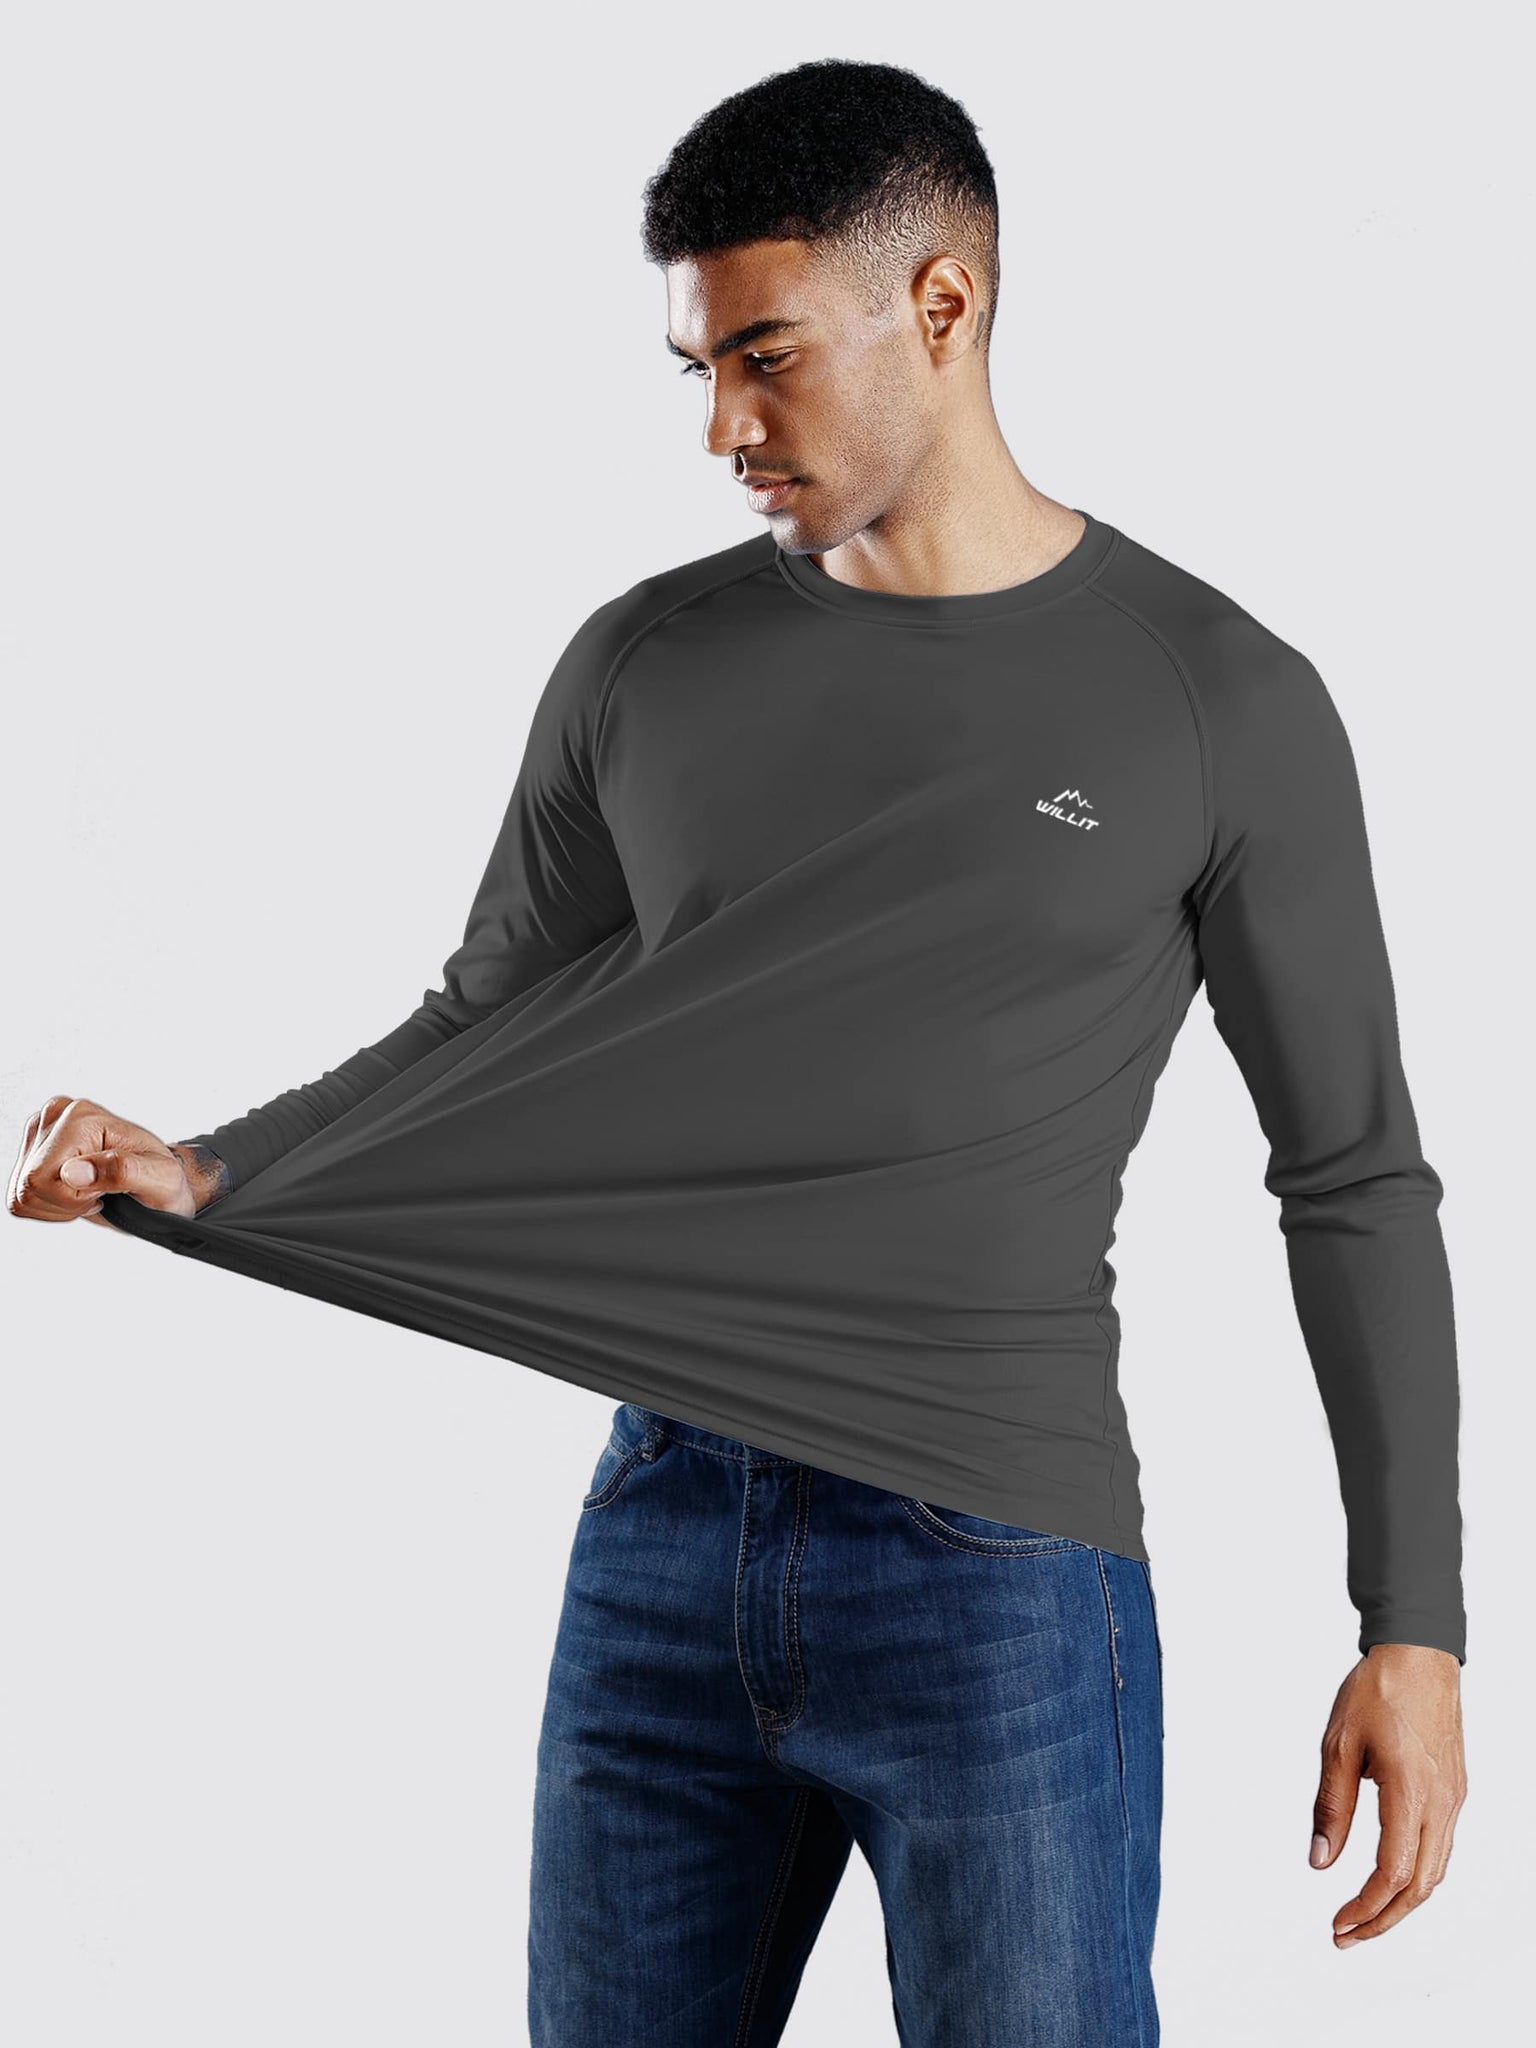 Willit Men's Sun Protection Long Sleeve Shirts_DeepGray_model2